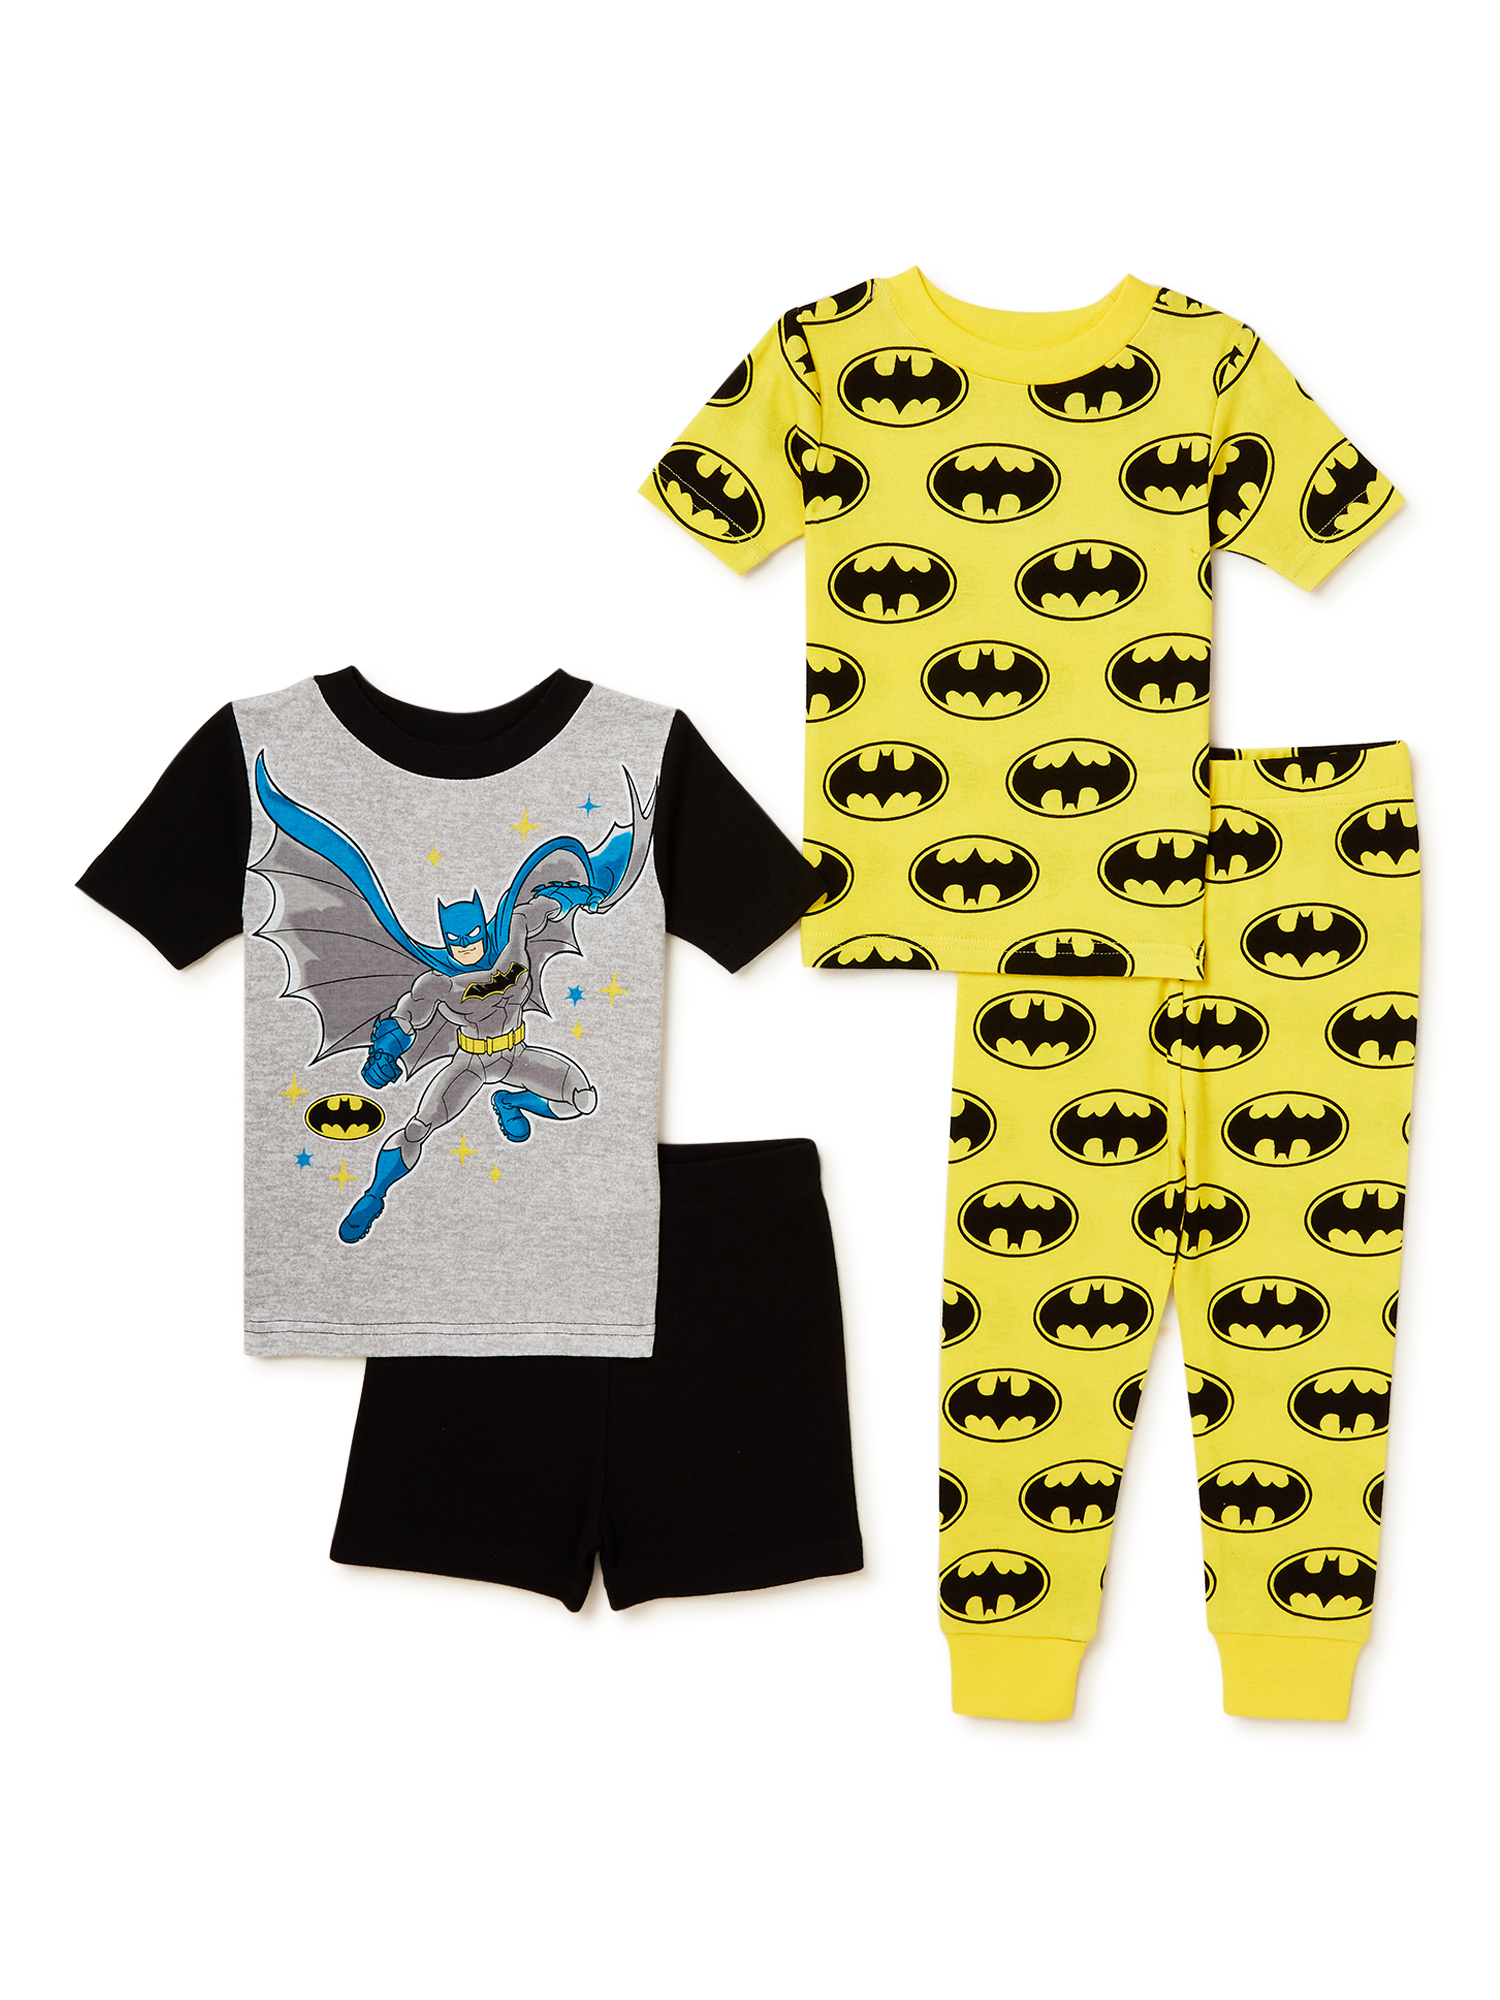 Batman Toddler Boy Cotton T-Shirt, Short, and Pants Pajama Set, 4-Piece, Sizes 12M-4T - image 1 of 4